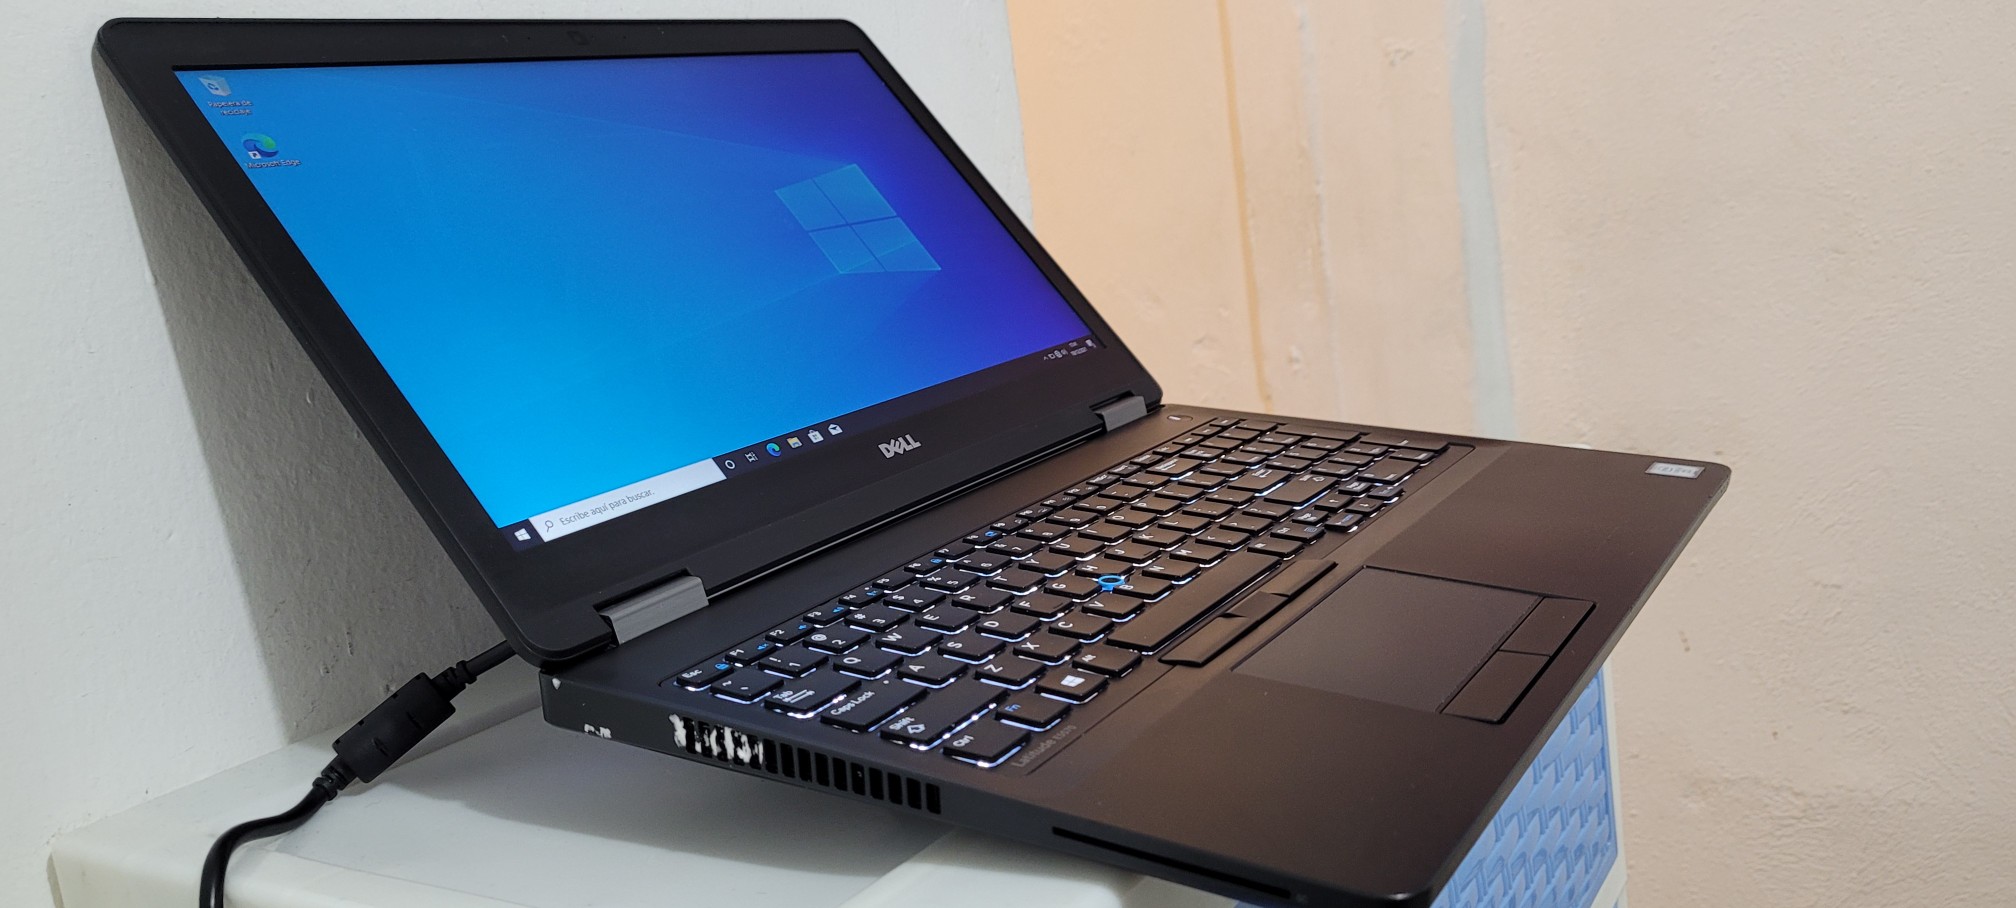 computadoras y laptops - Dell 5570 17 Pulg Core i5 6ta Ram 16gb ddr4 Disco 256gb SSD Video 8gb 1